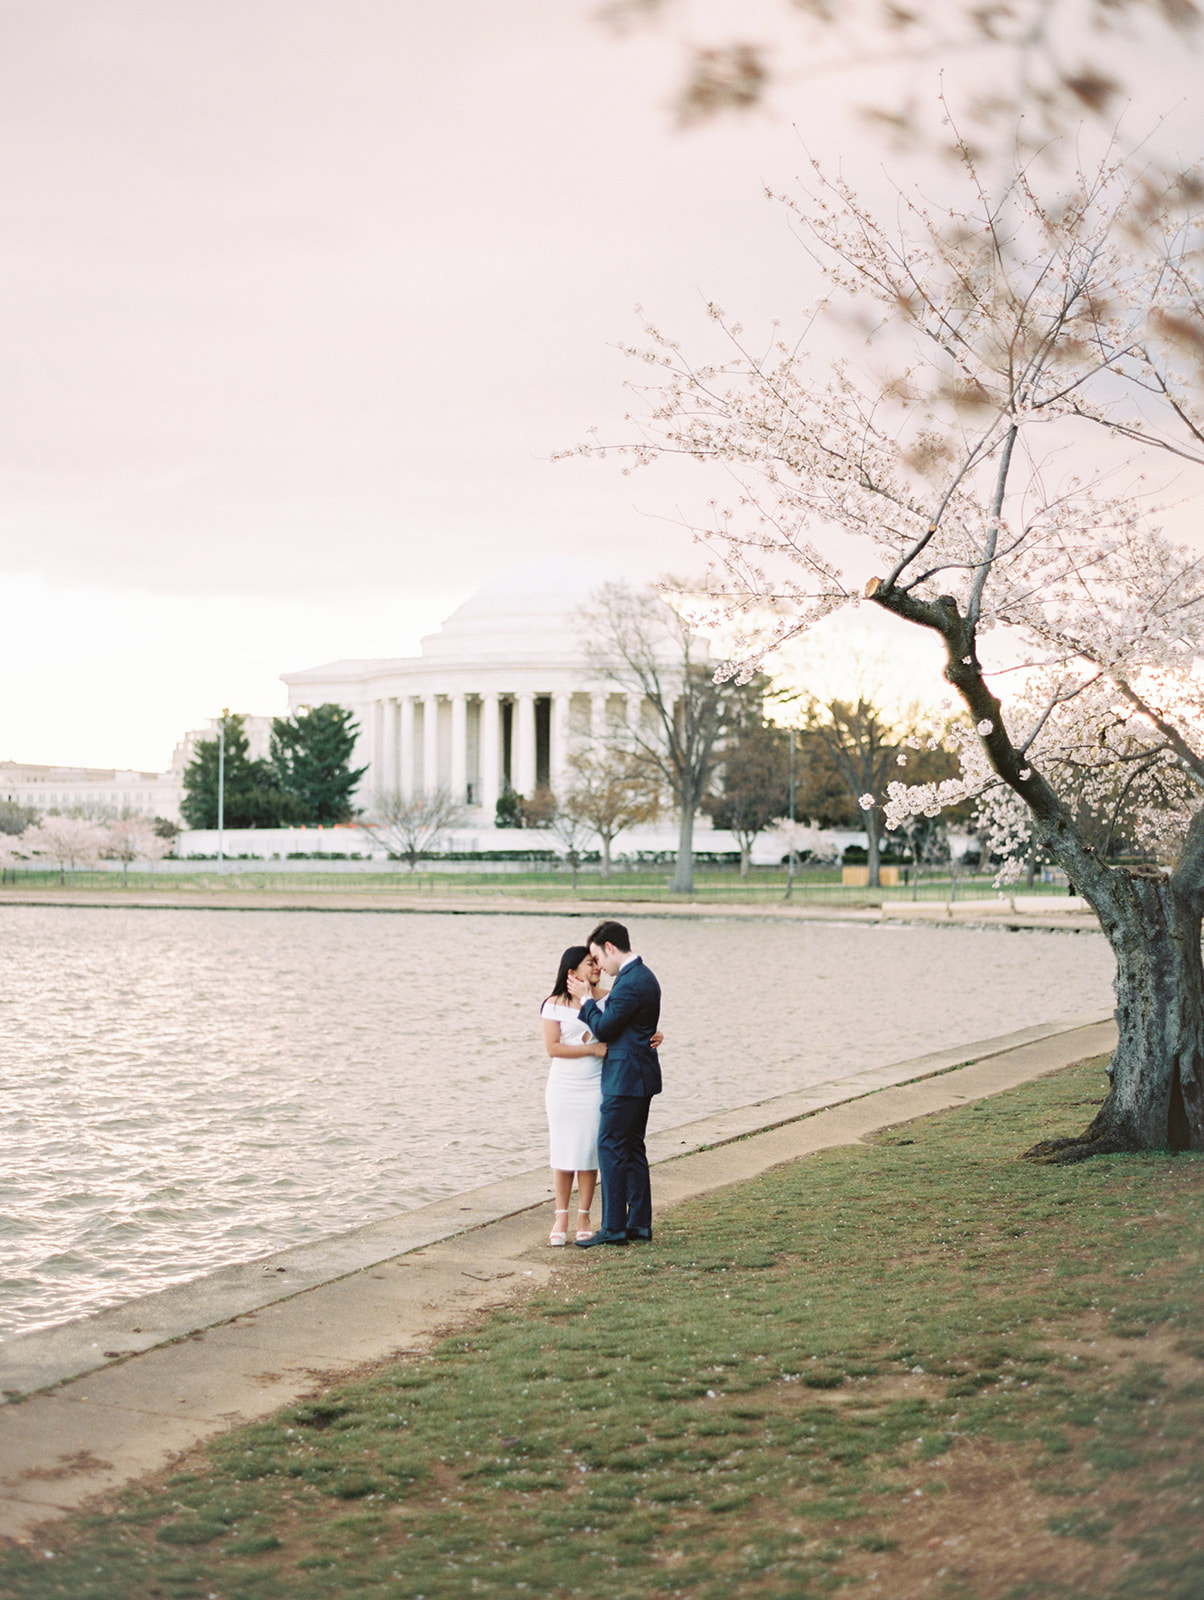 A couple walking embracing near the Tidal Basin during the Washington DC Cherry Blossom season